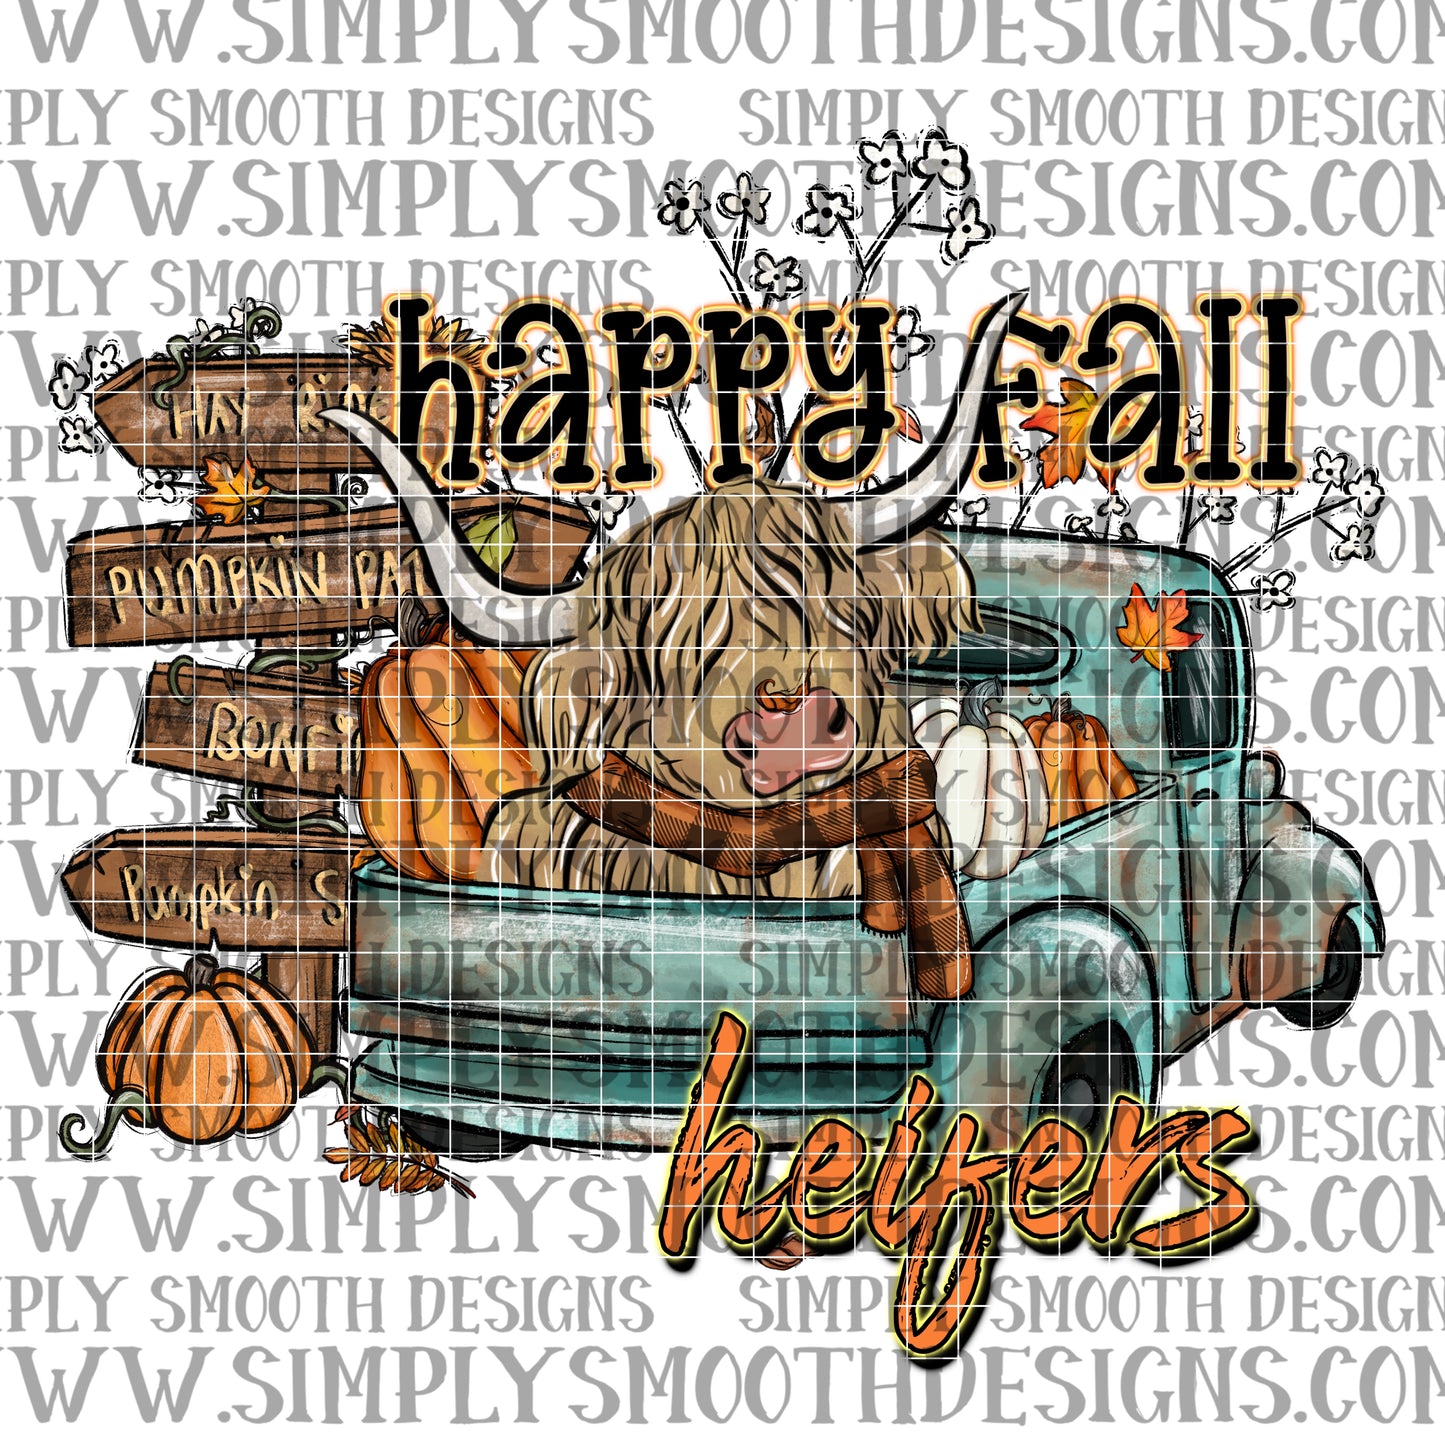 Happy fall heifers